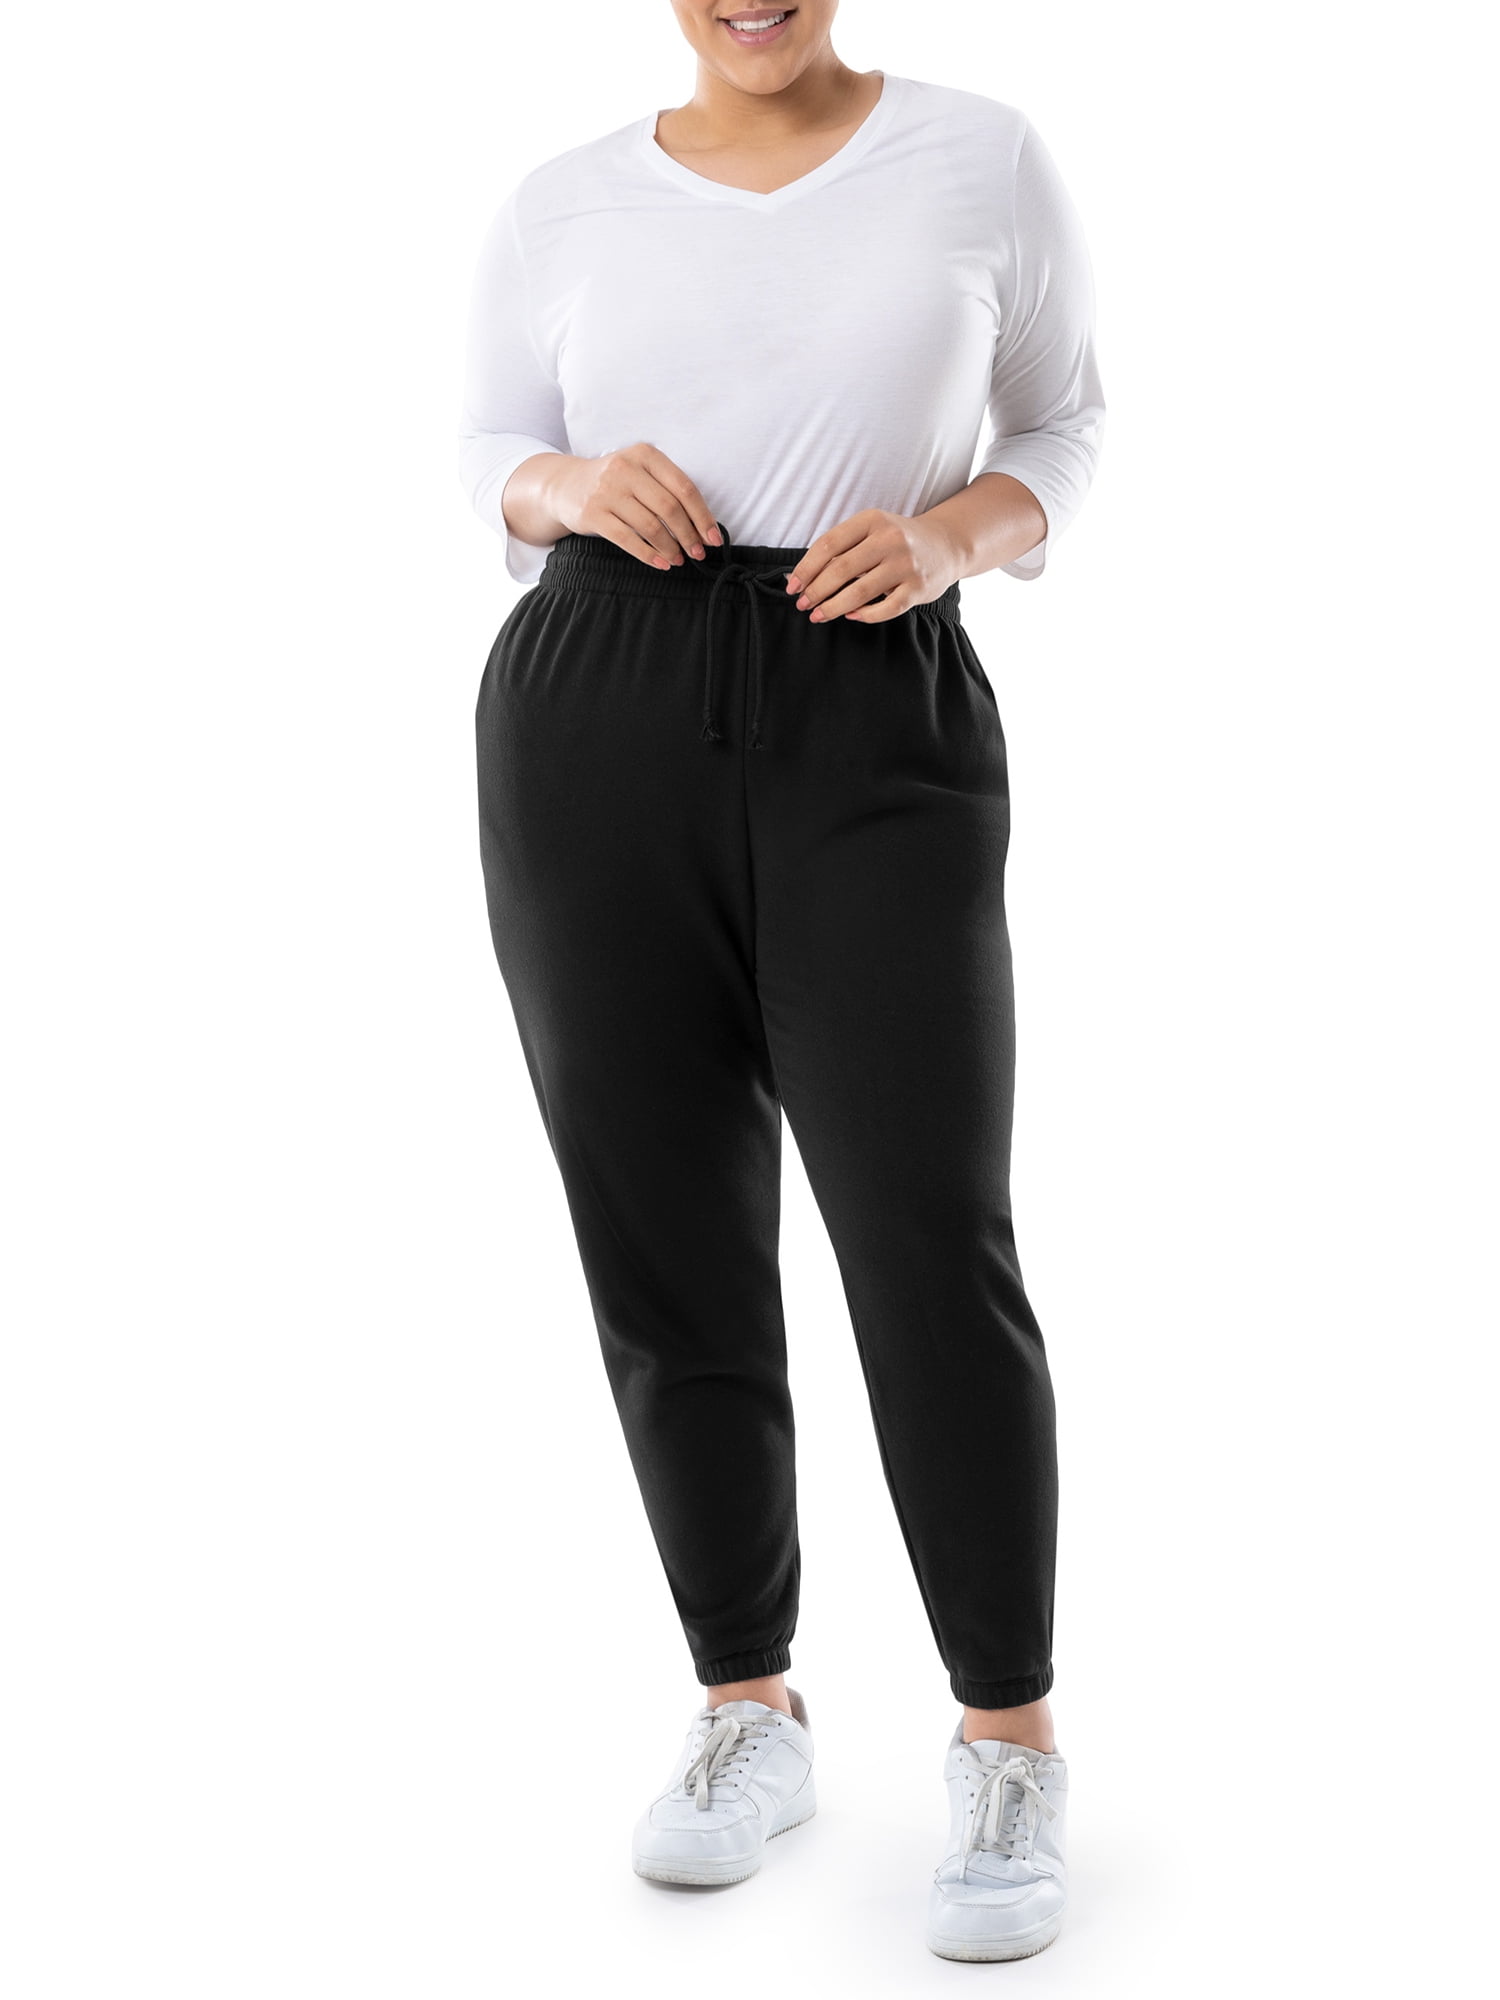 Terra & Sky Women's Plus Size Cotton Blend Fleece Sweatpants, 3